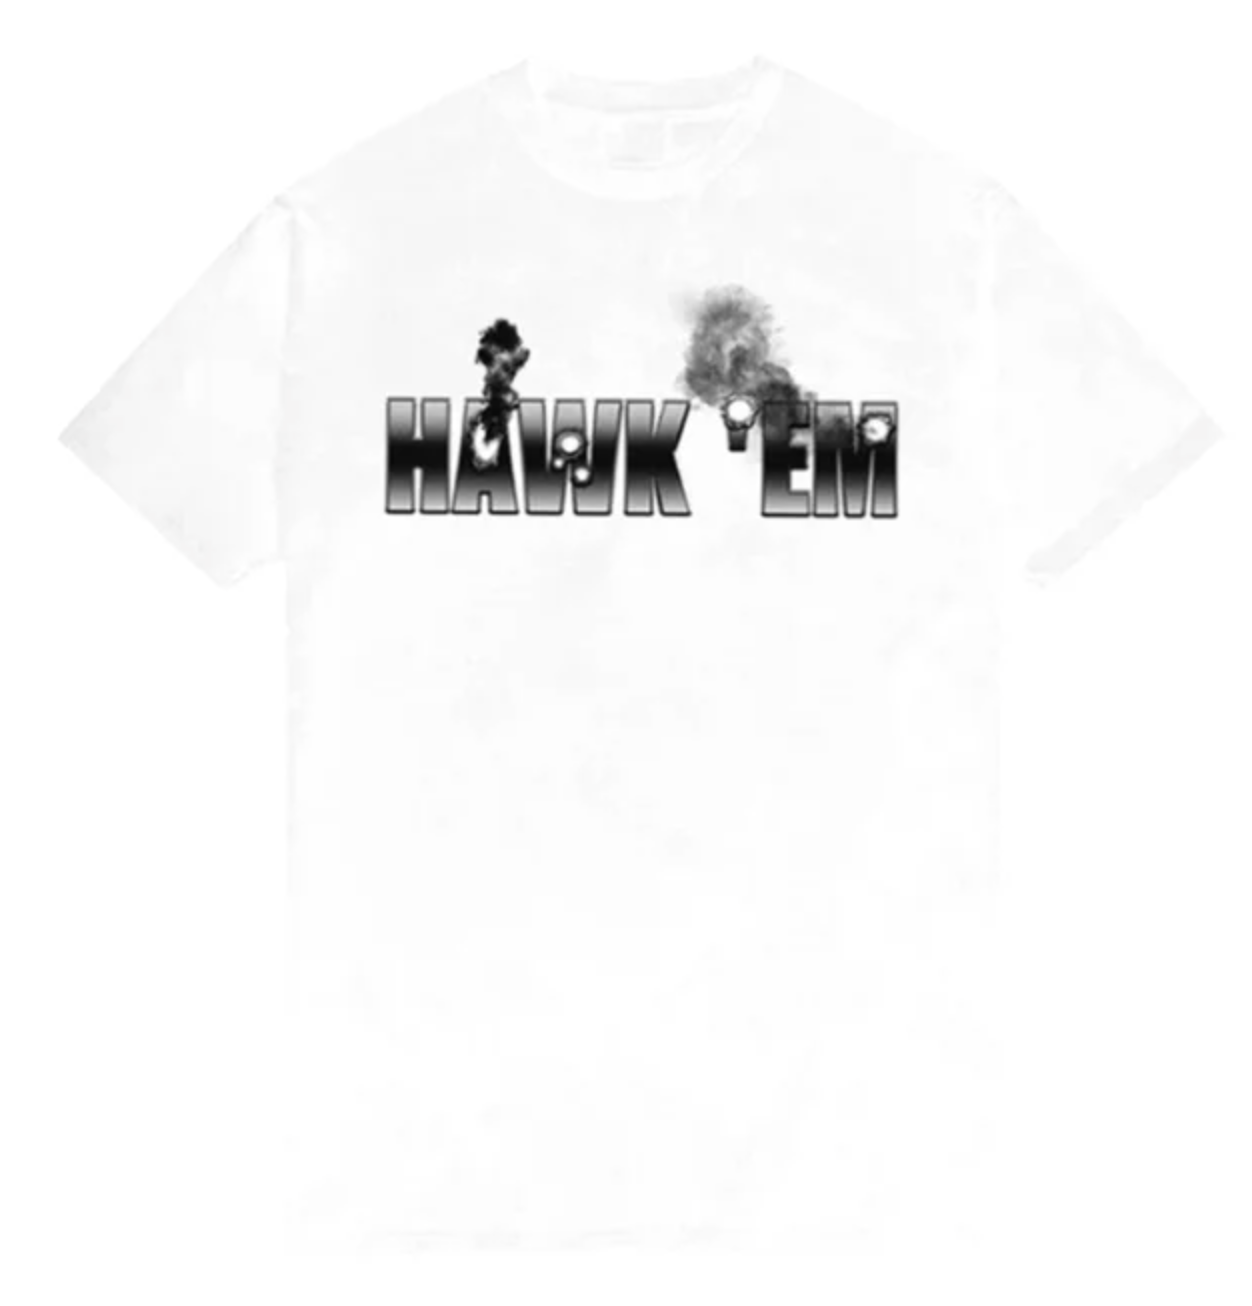 Pop Smoke x Vlone Hawk Em' T-shirt White